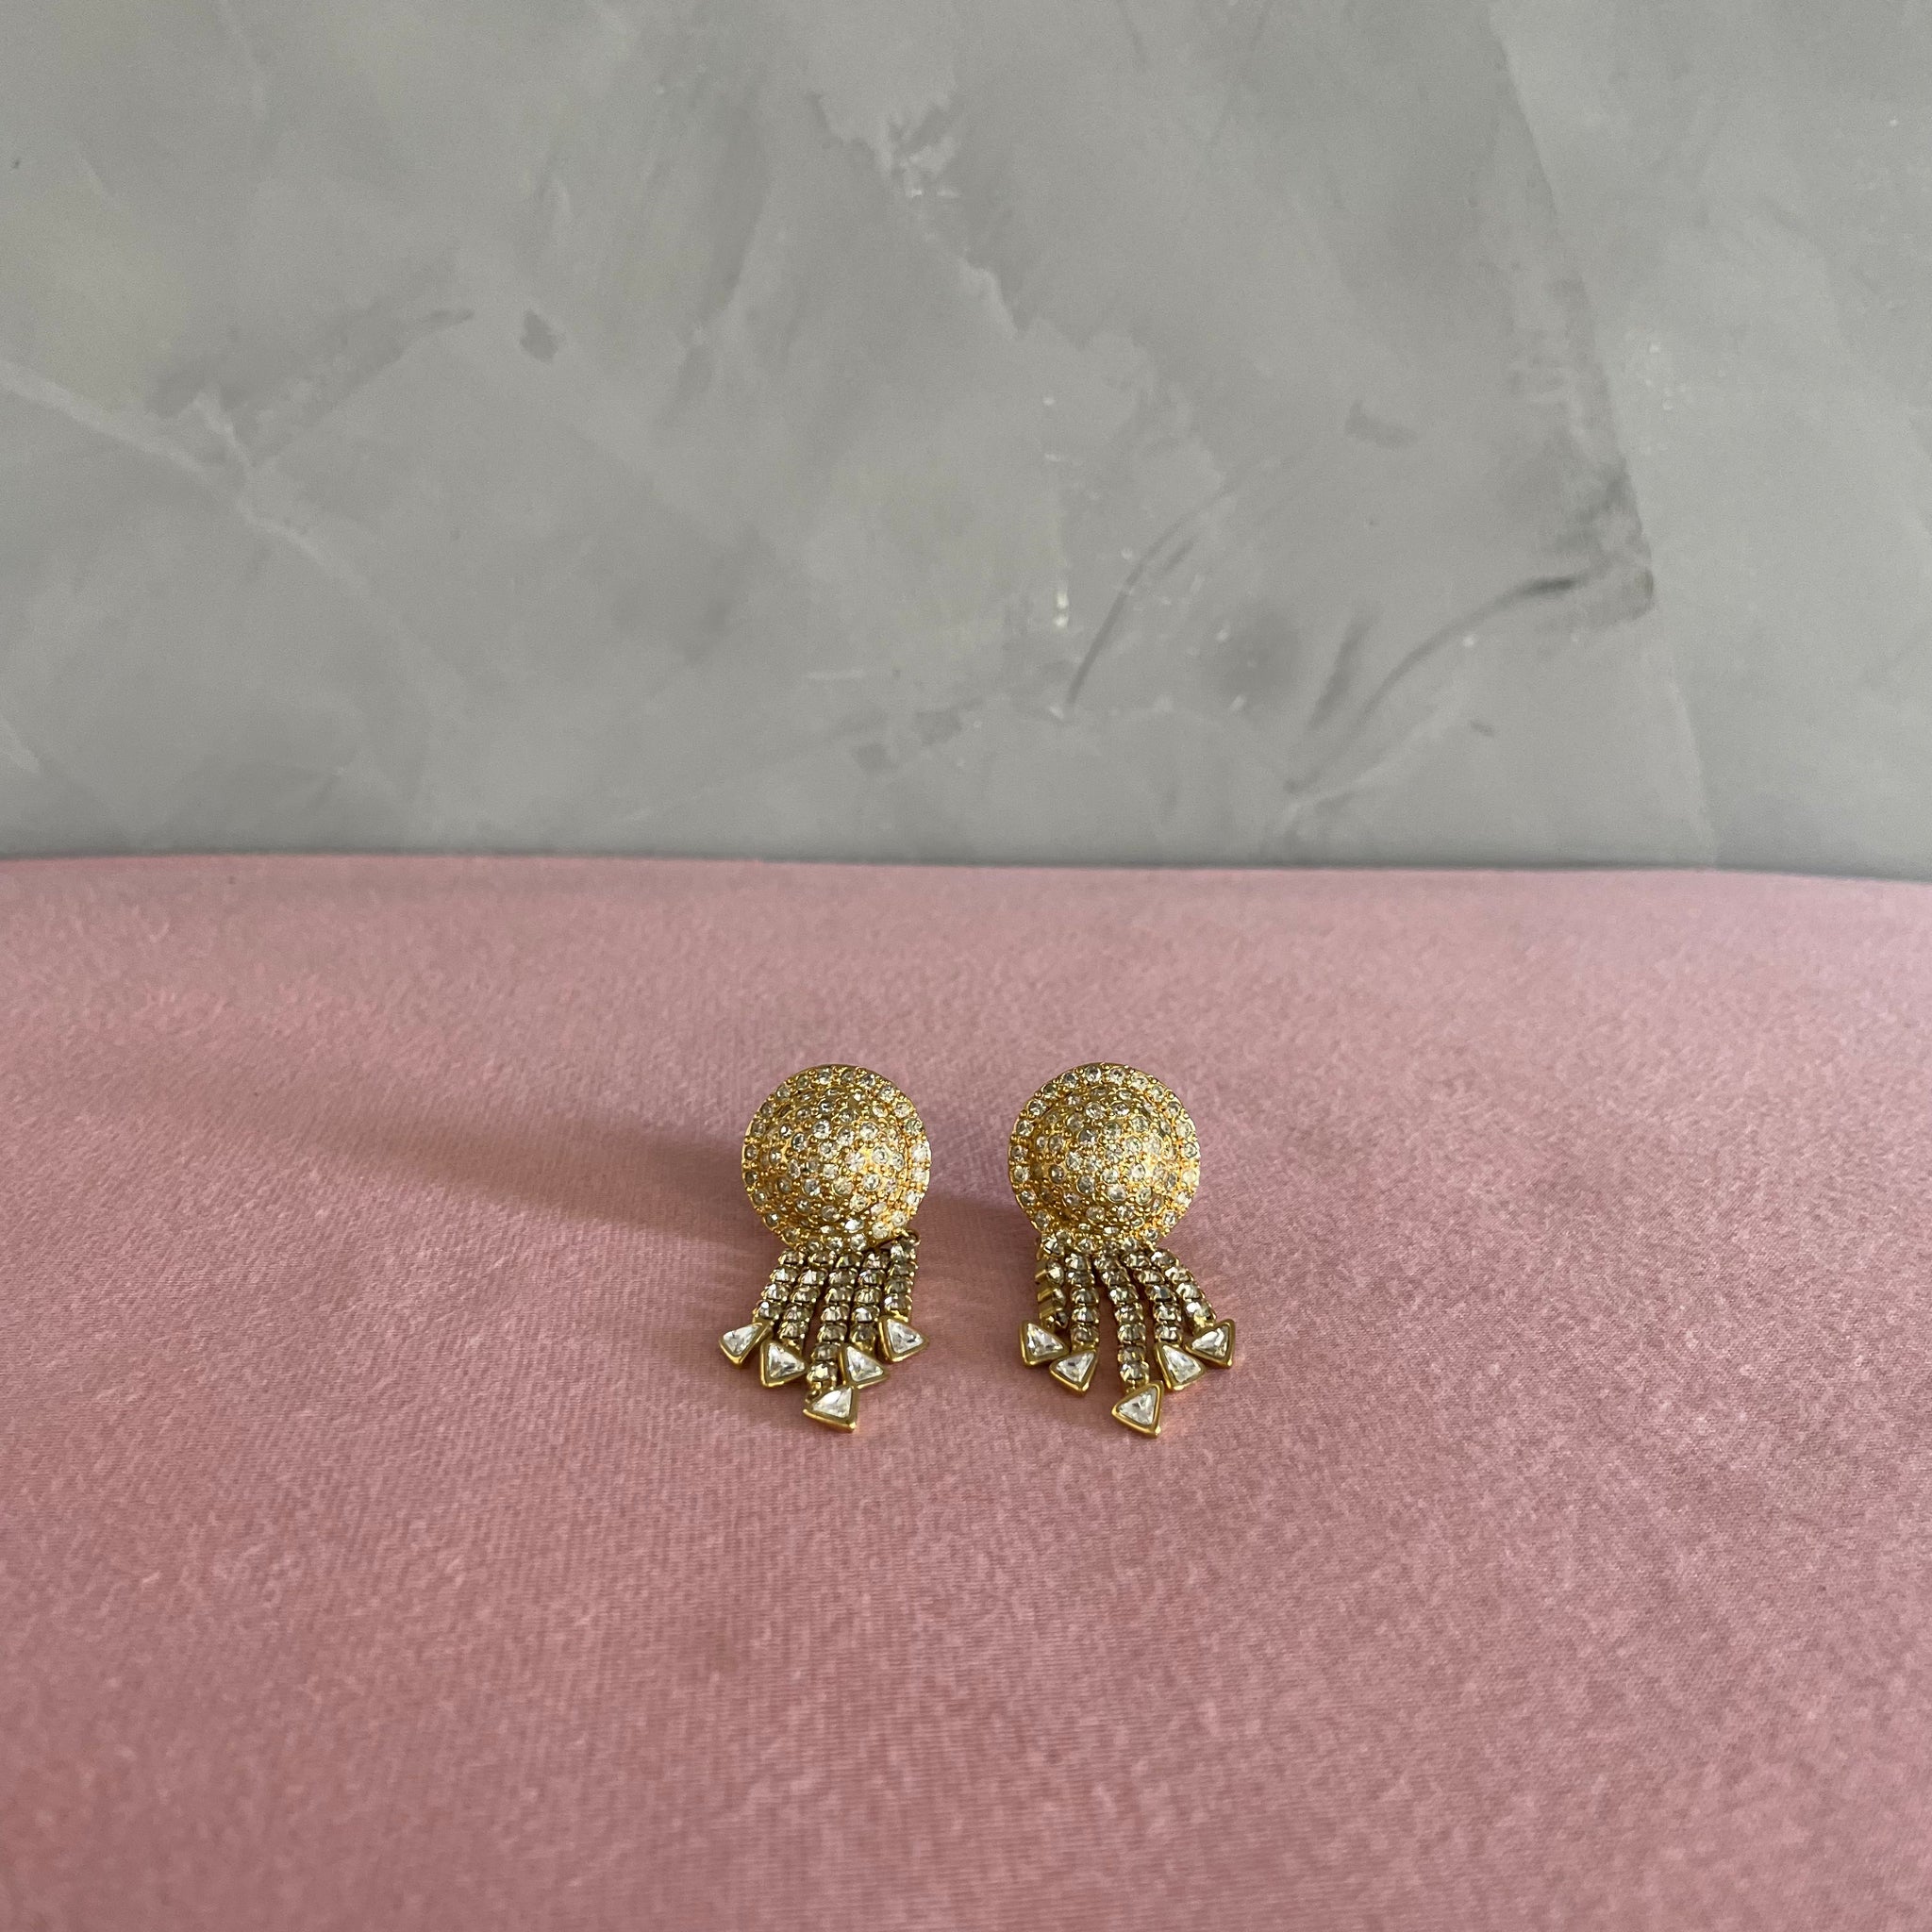 Gianni Versace Earrings